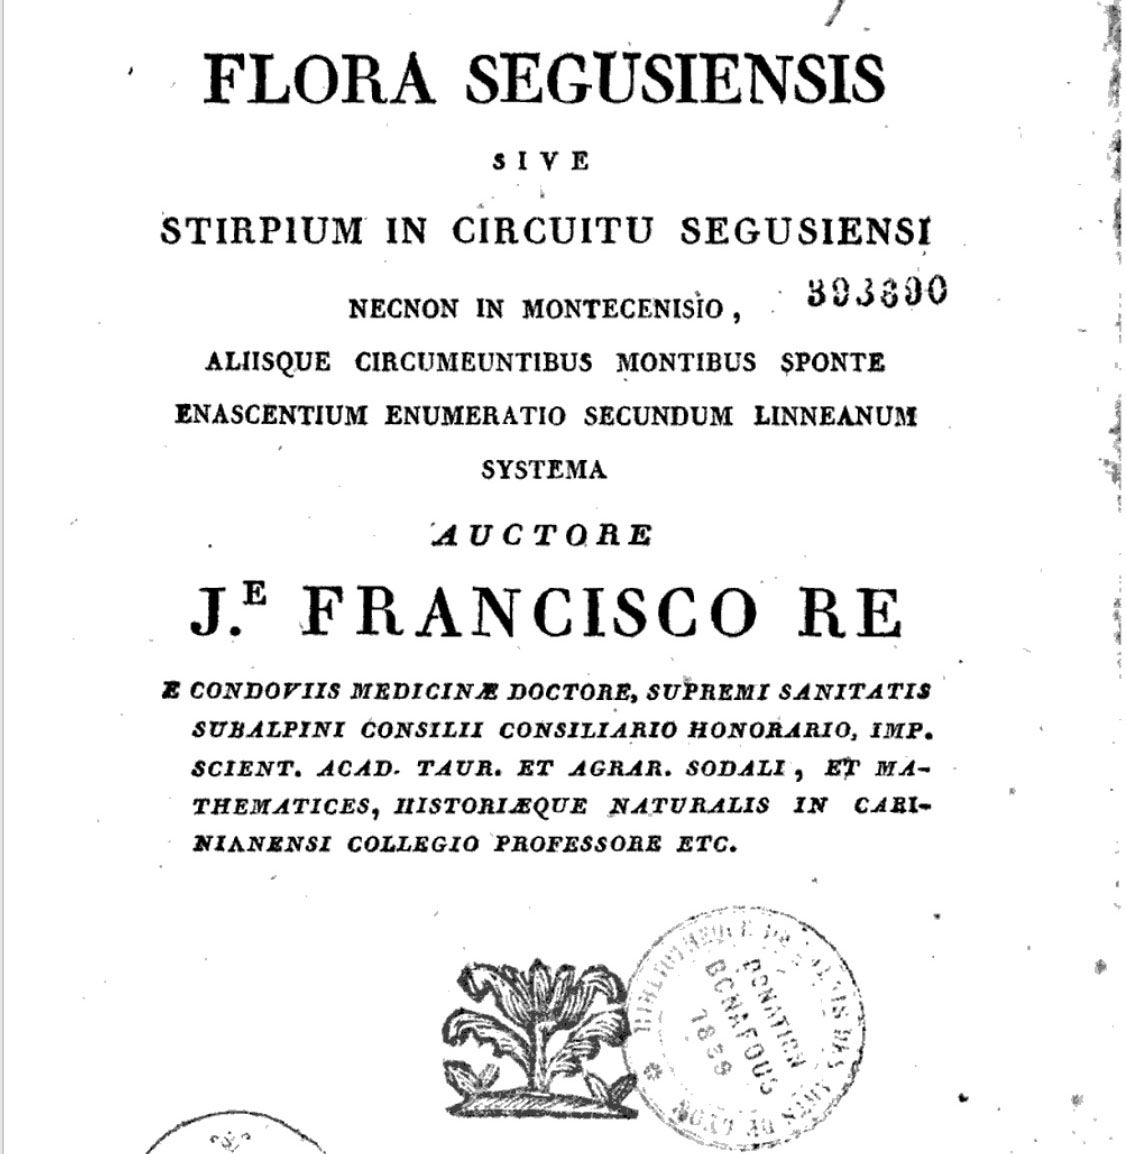 Flora Segusiensis